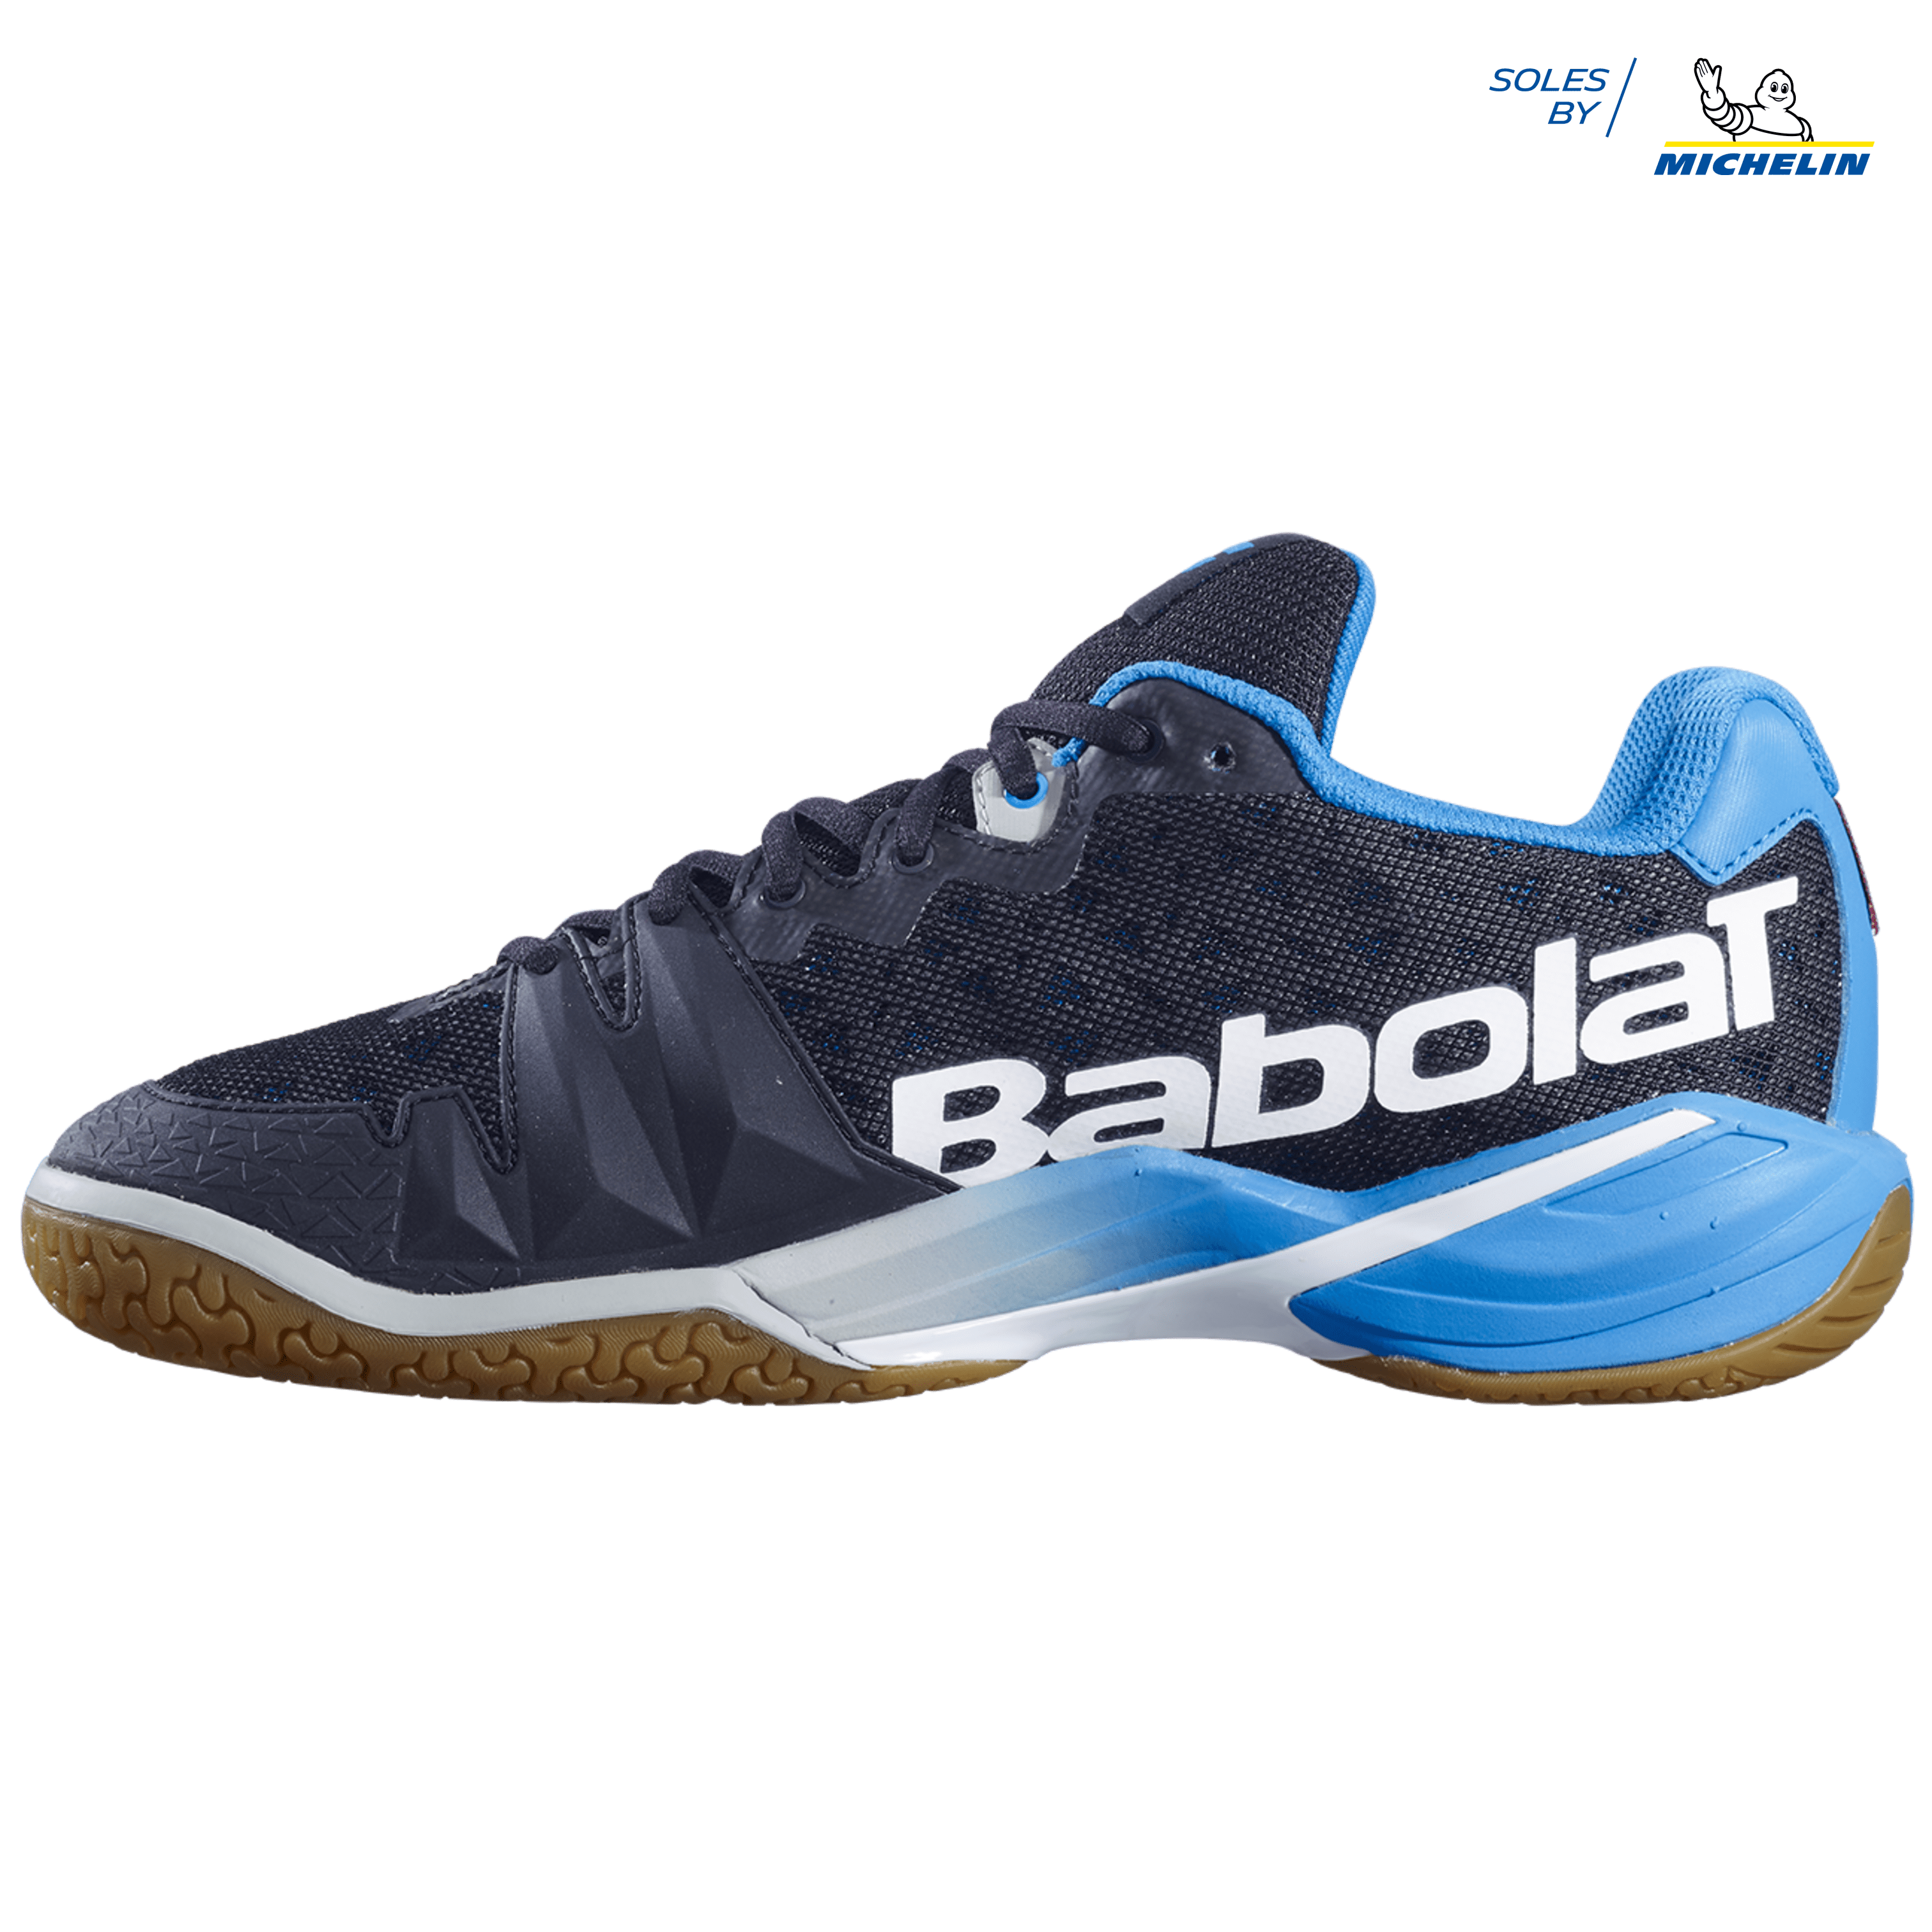 2020 White/Estate Blue Babolat Shadow Tour Mens Badminton Shoes 